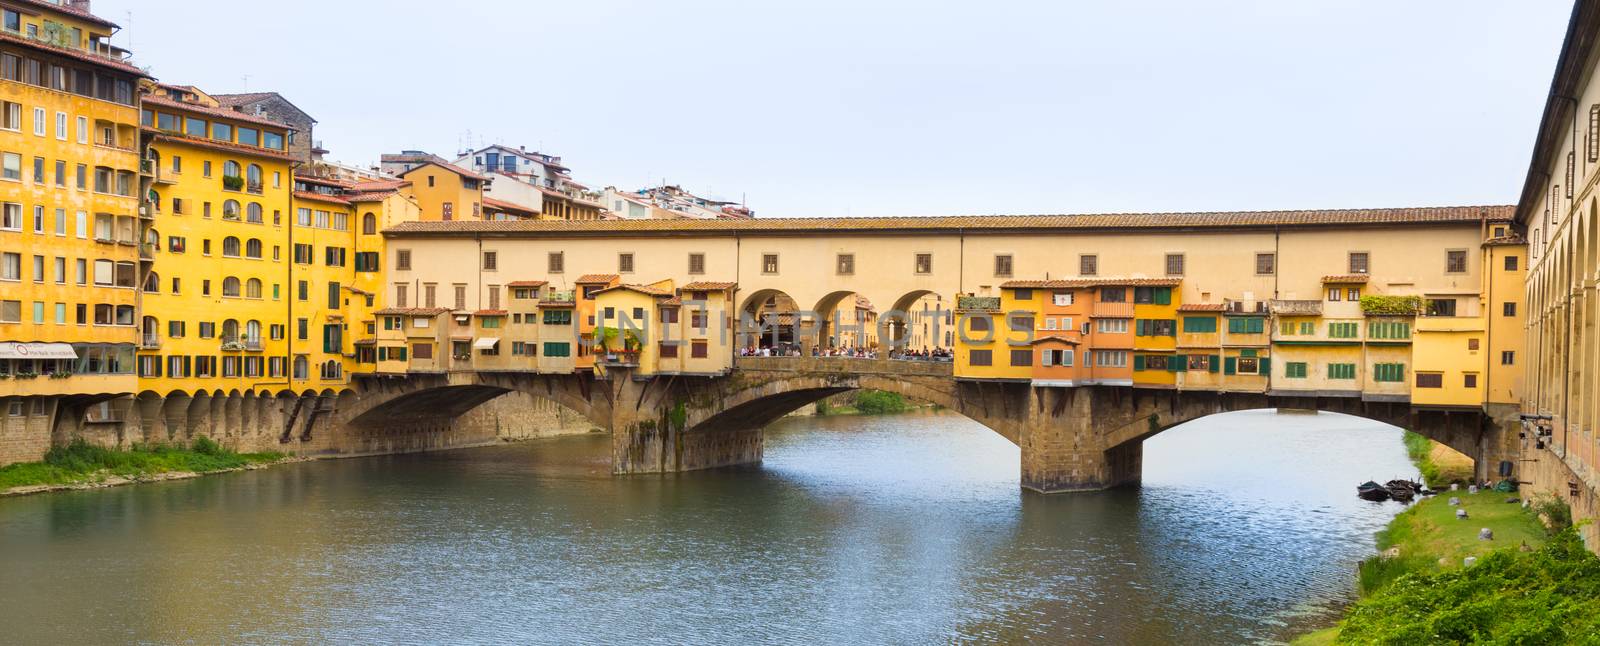 Ponte Vecchio, Florence, Italy. by kasto